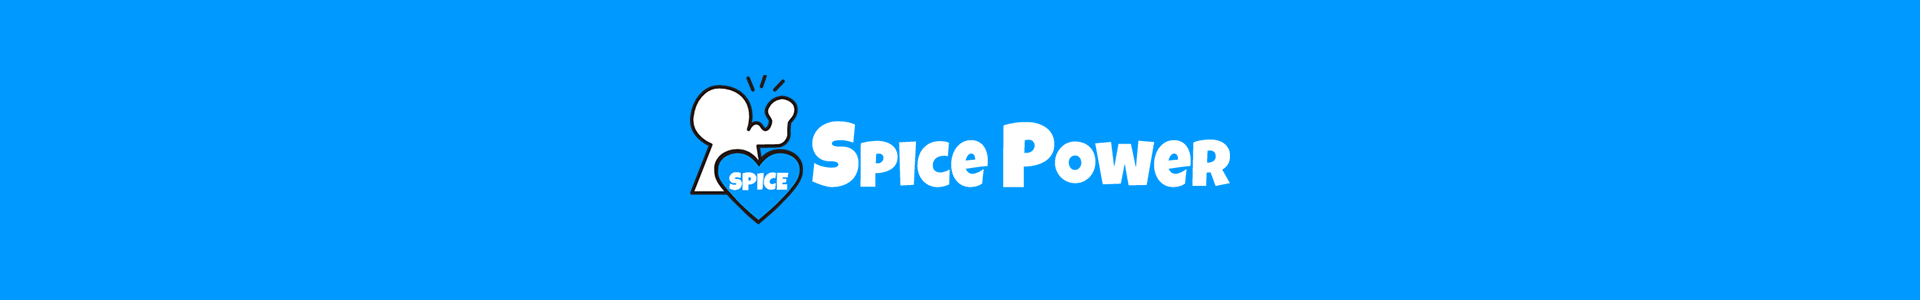 spice power